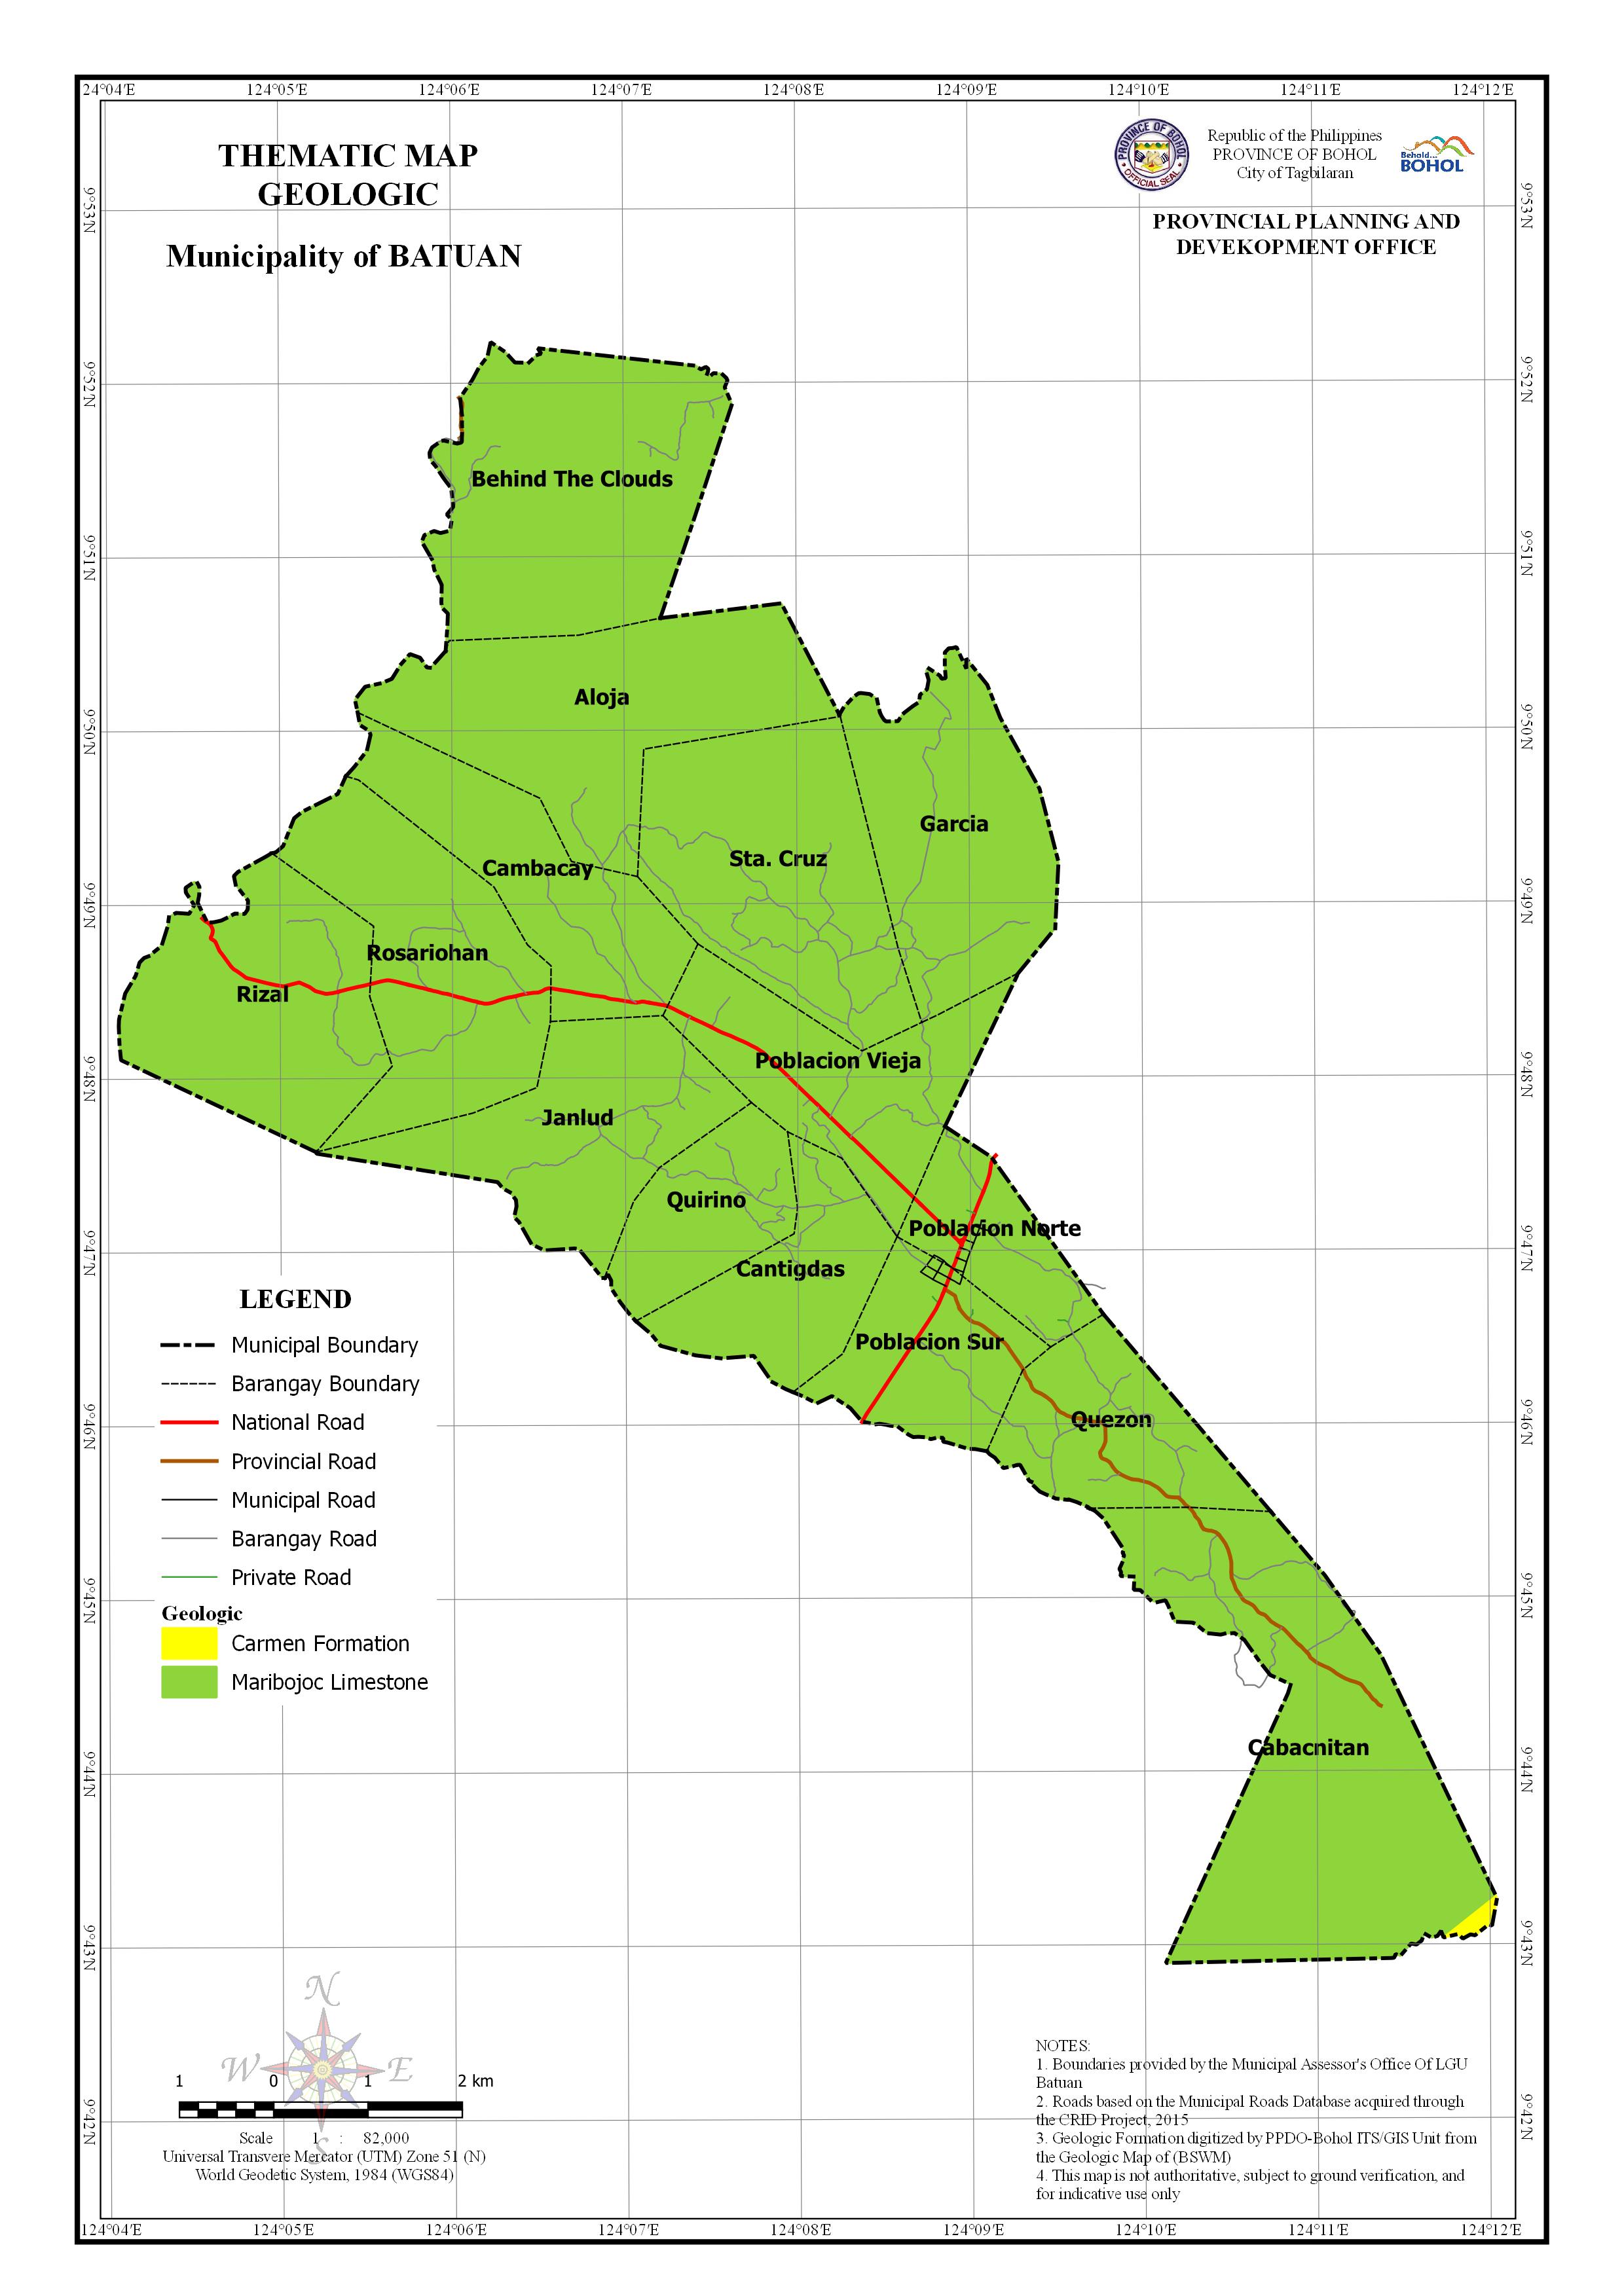 Geologic Map of the Municipality of Batuan